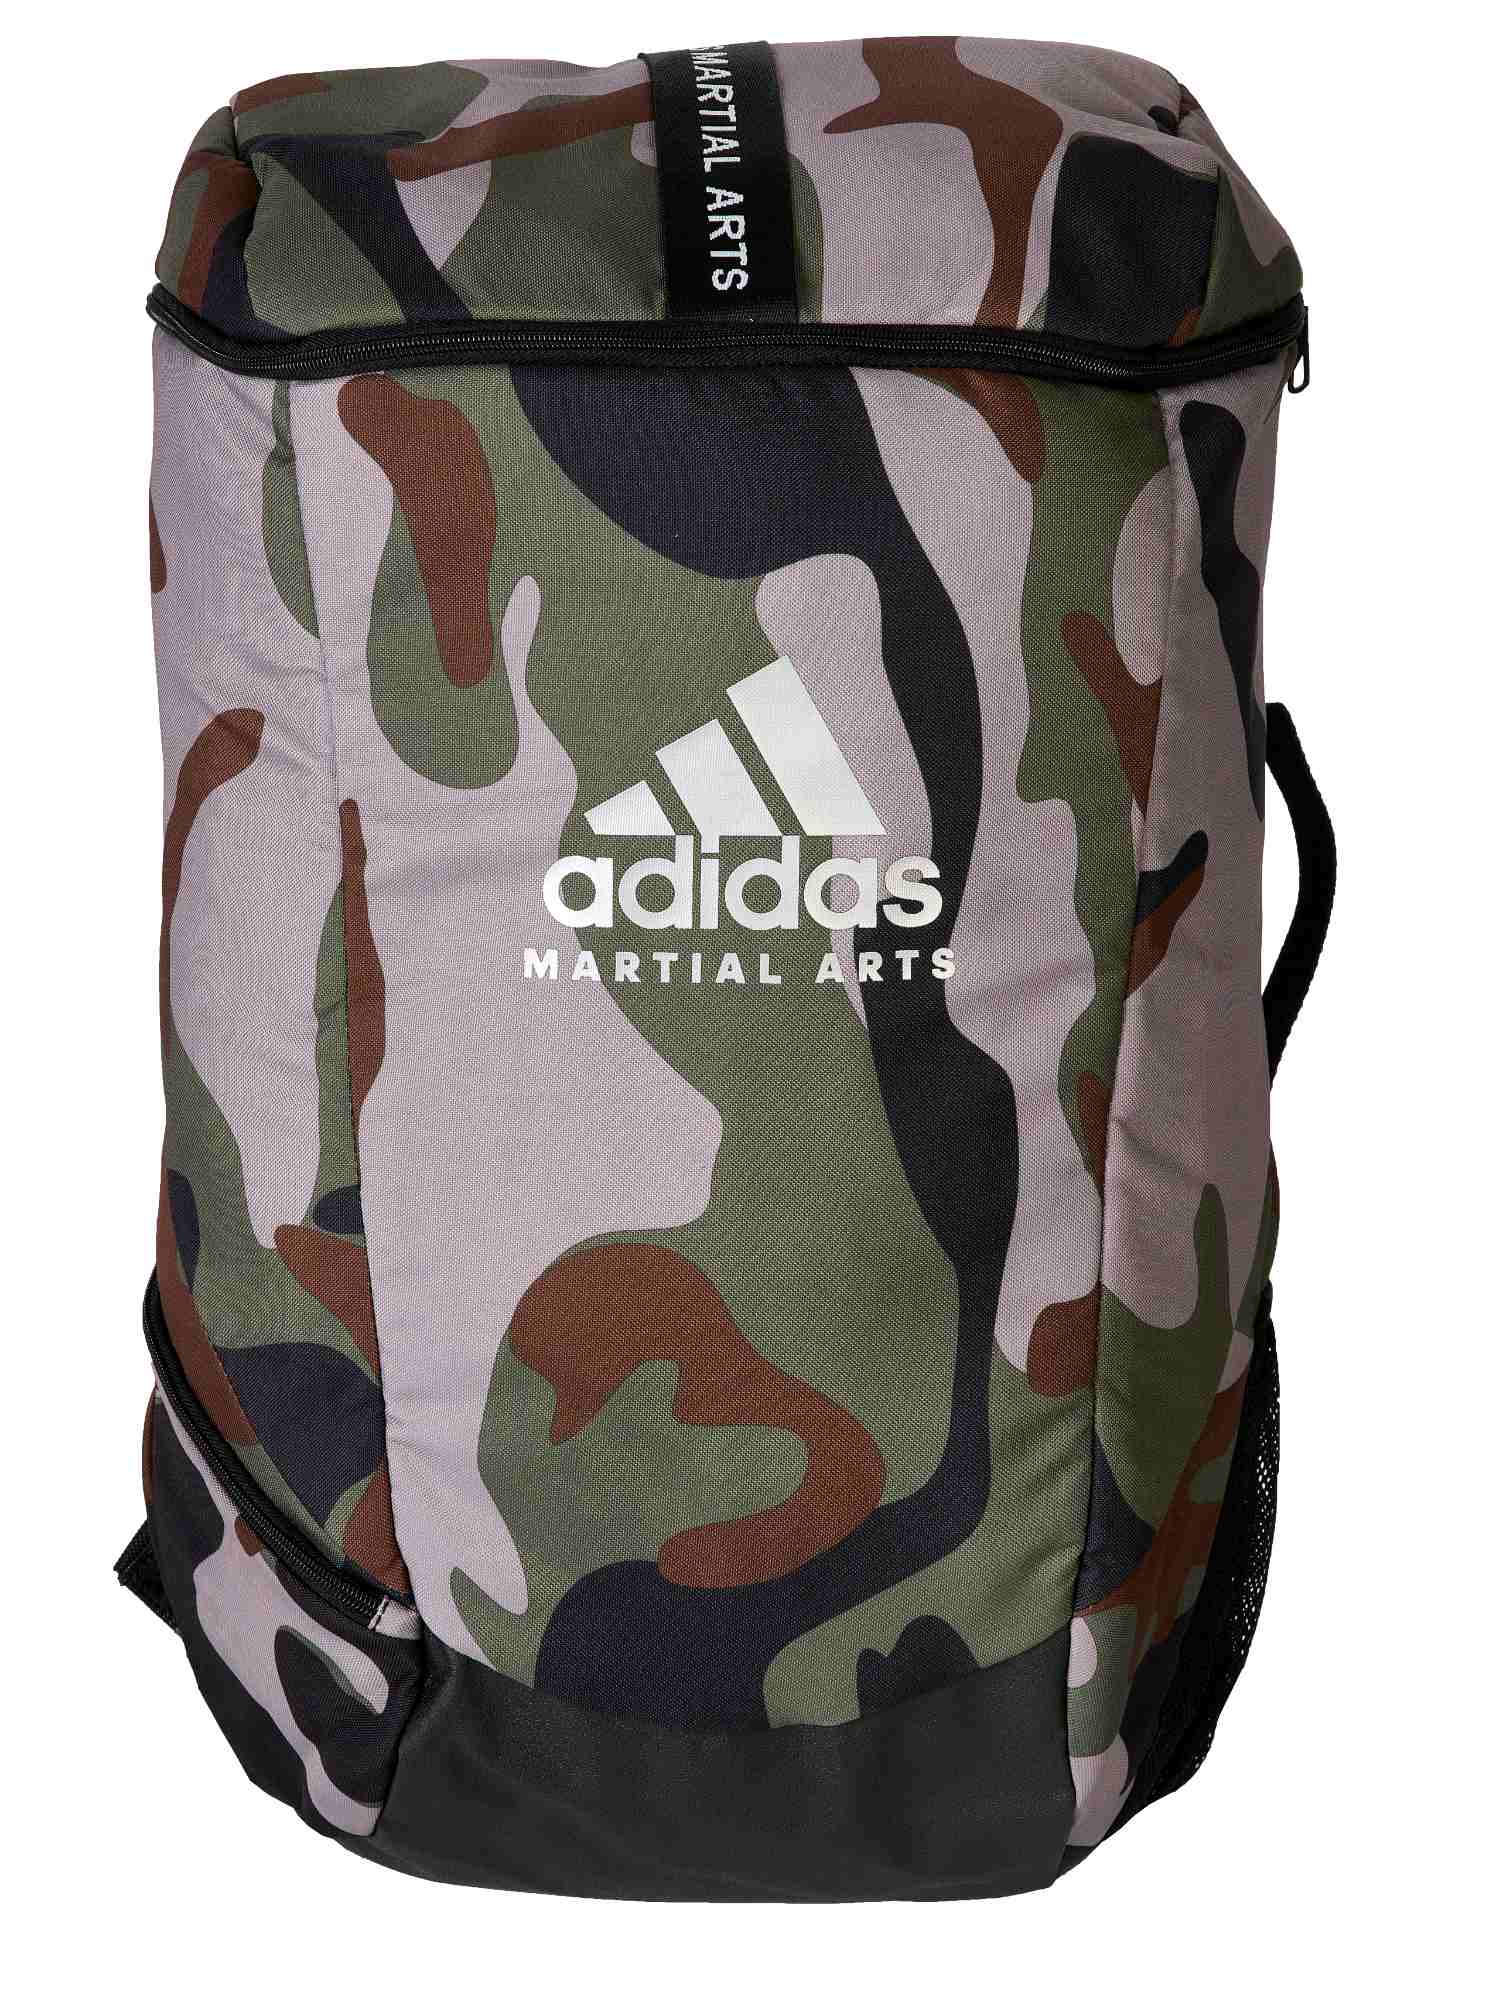 adidas backpack Martial Arts camo green/black, adiACC090MA